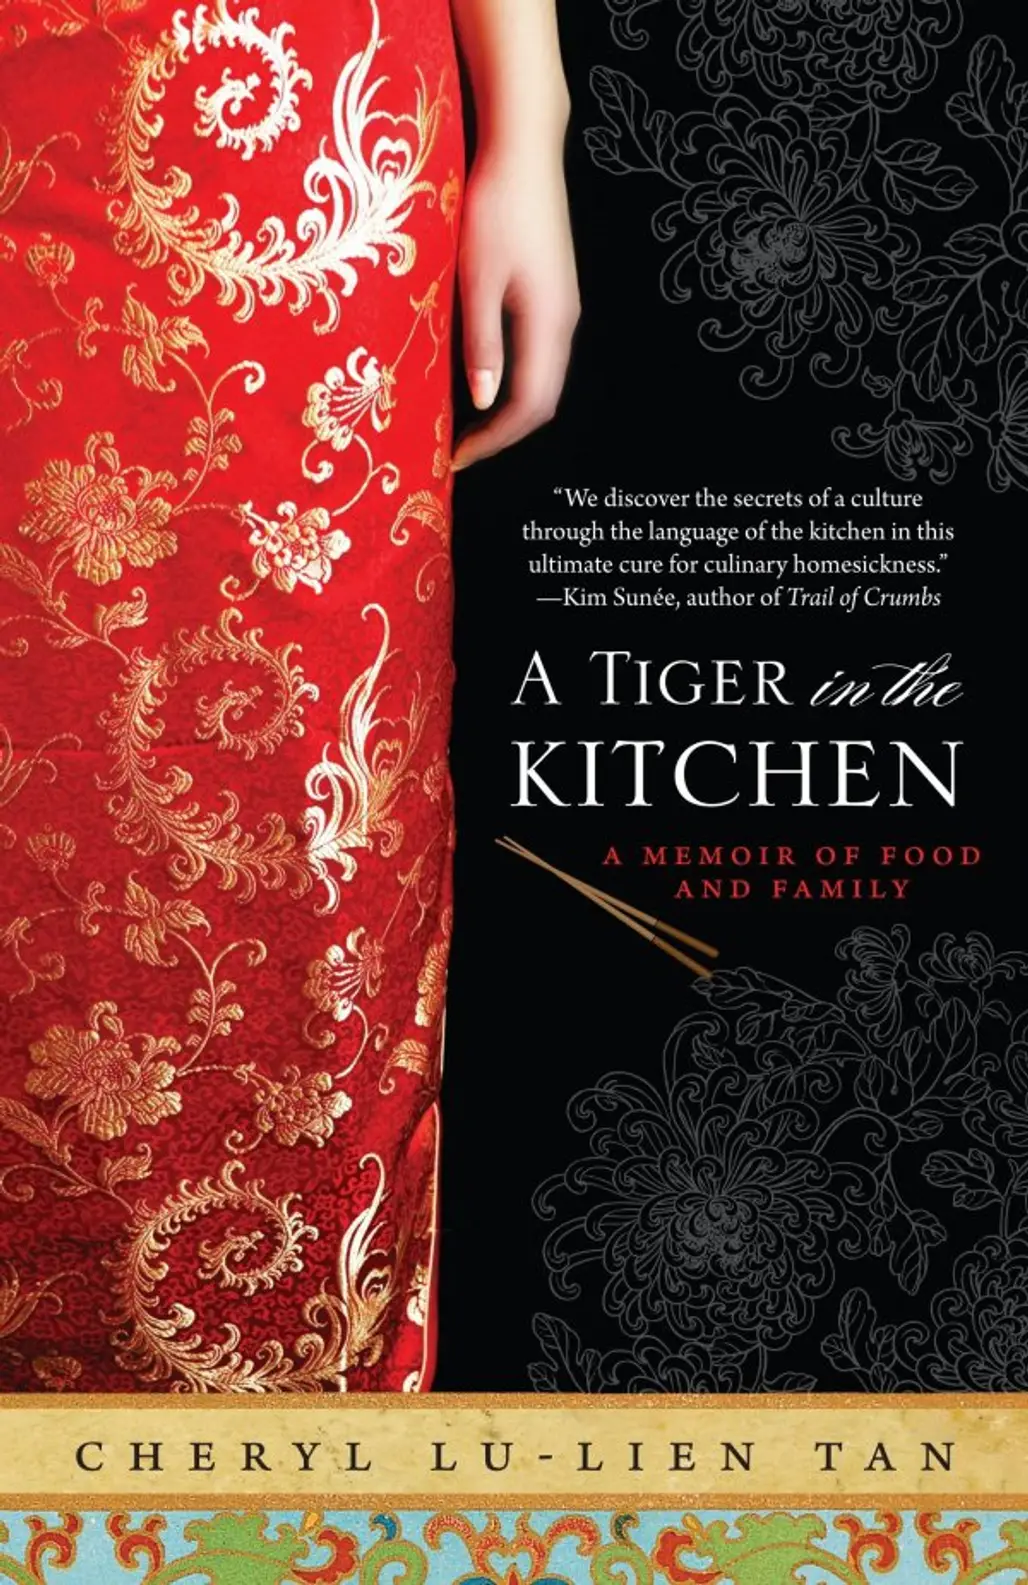 "a Tiger in the Kitchen" by Cheryl Lu-Lien Tan